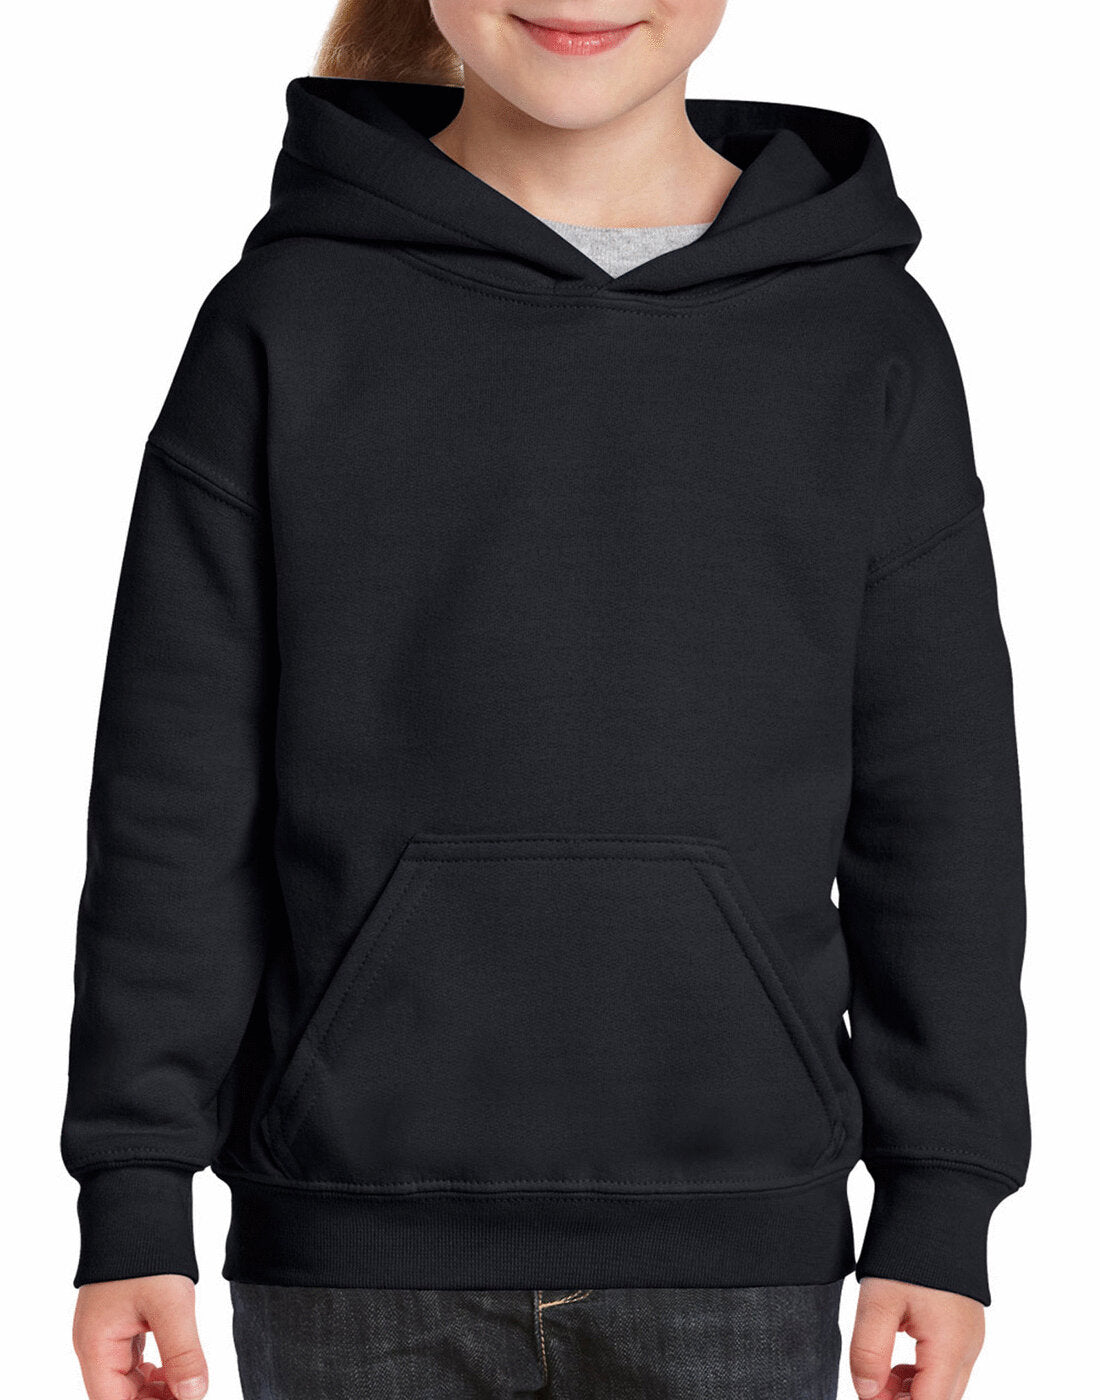 Gildan Kids Heavy Blend Hooded Sweatshirt - Black